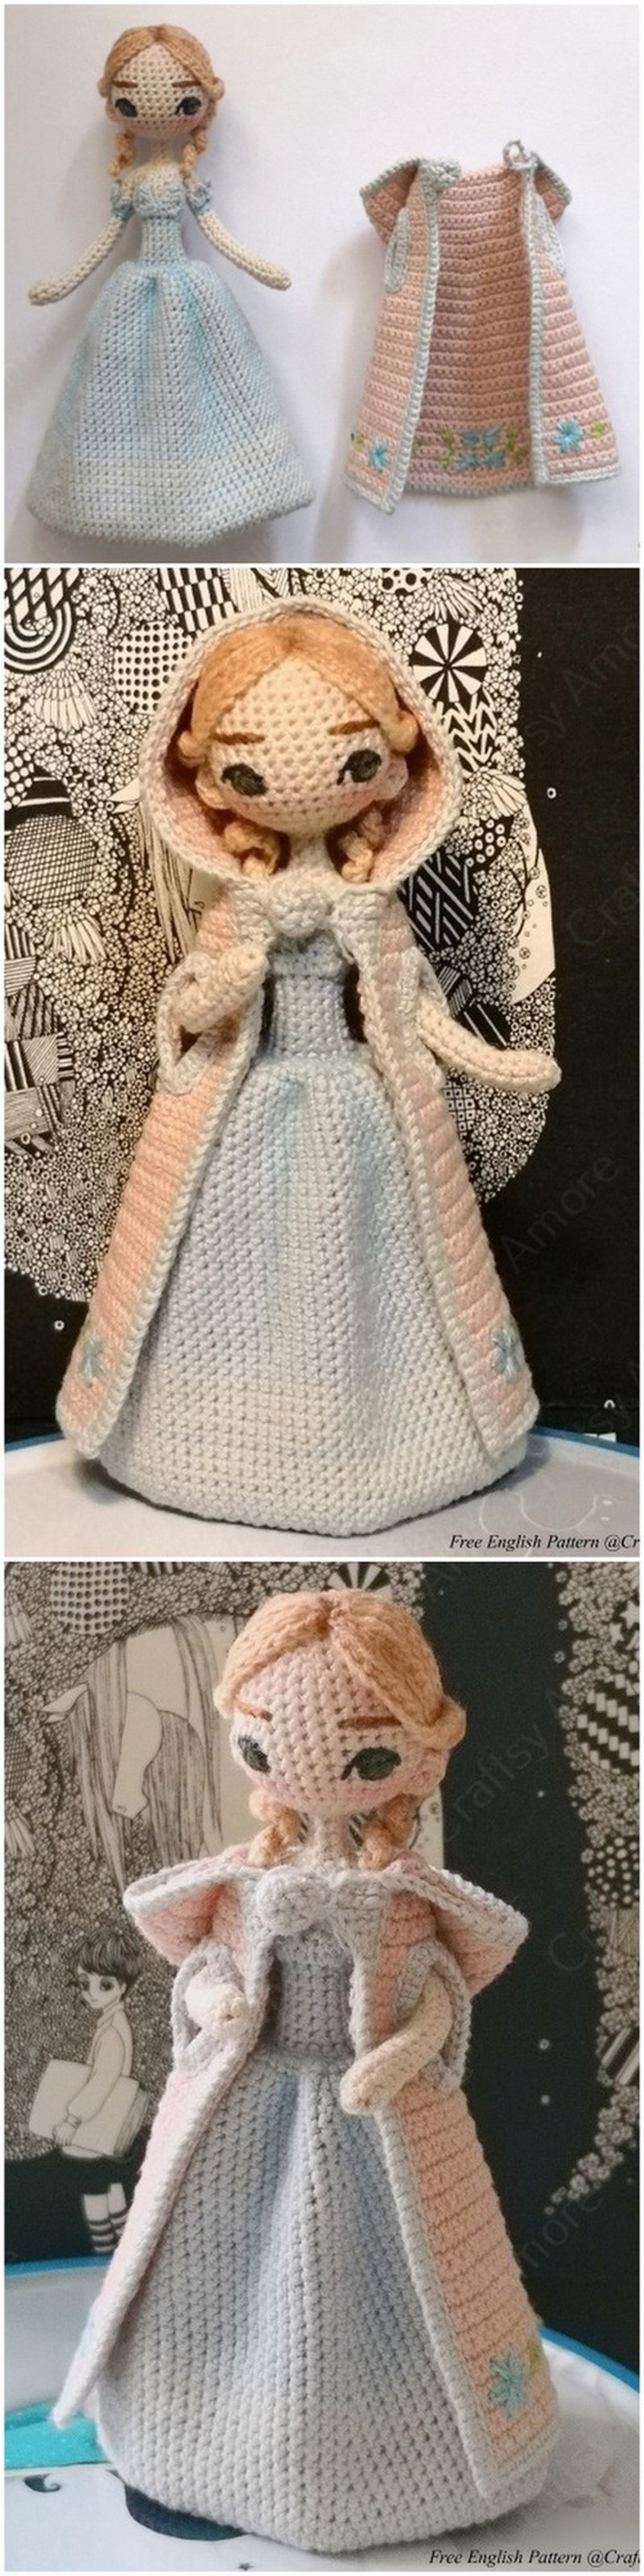 Crochet Amigurumi Doll Pattern (18)